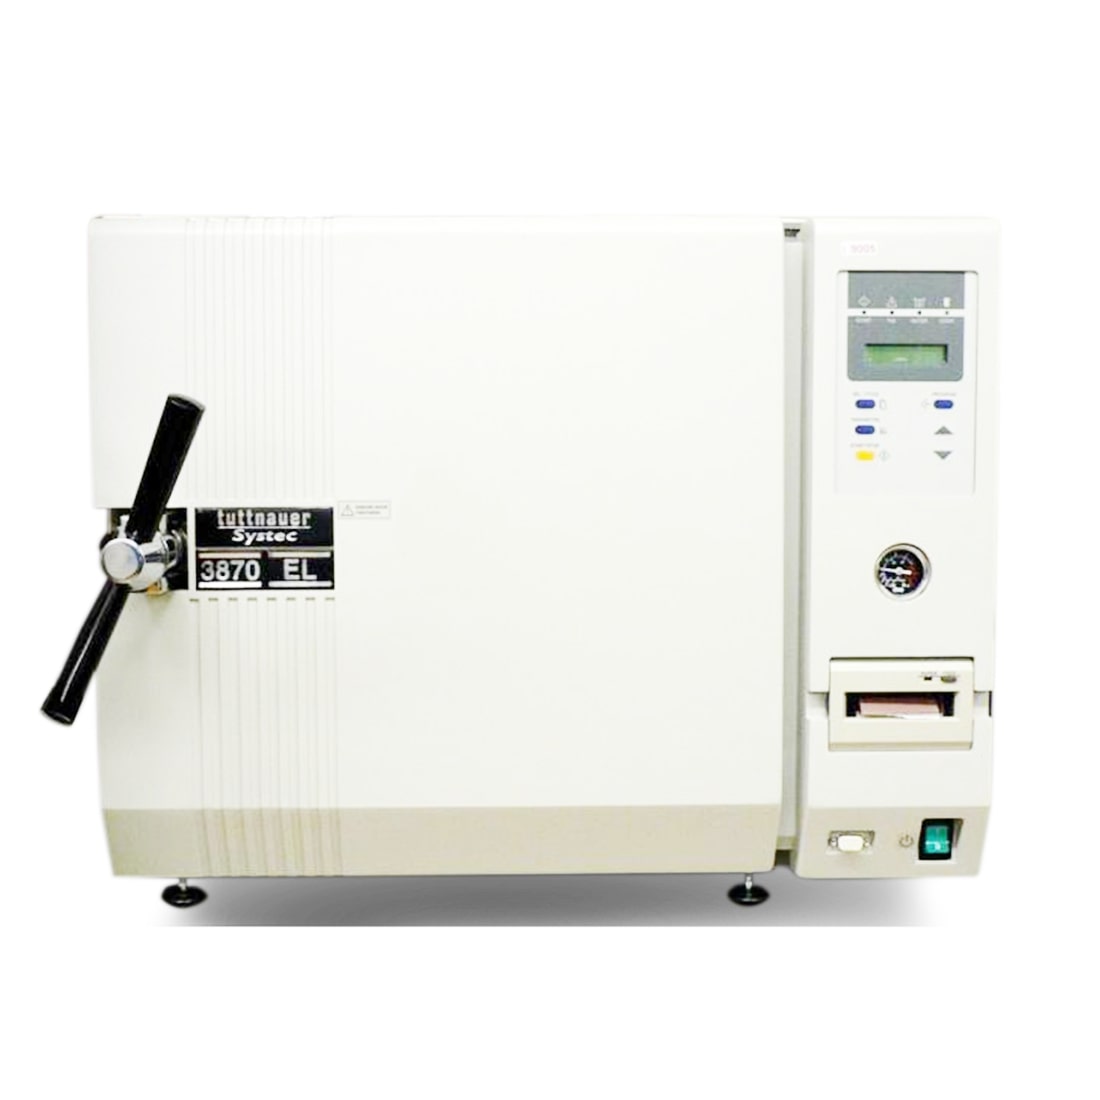 Tuttnauer 3870EL - Autoclave Automatic Sterilizer